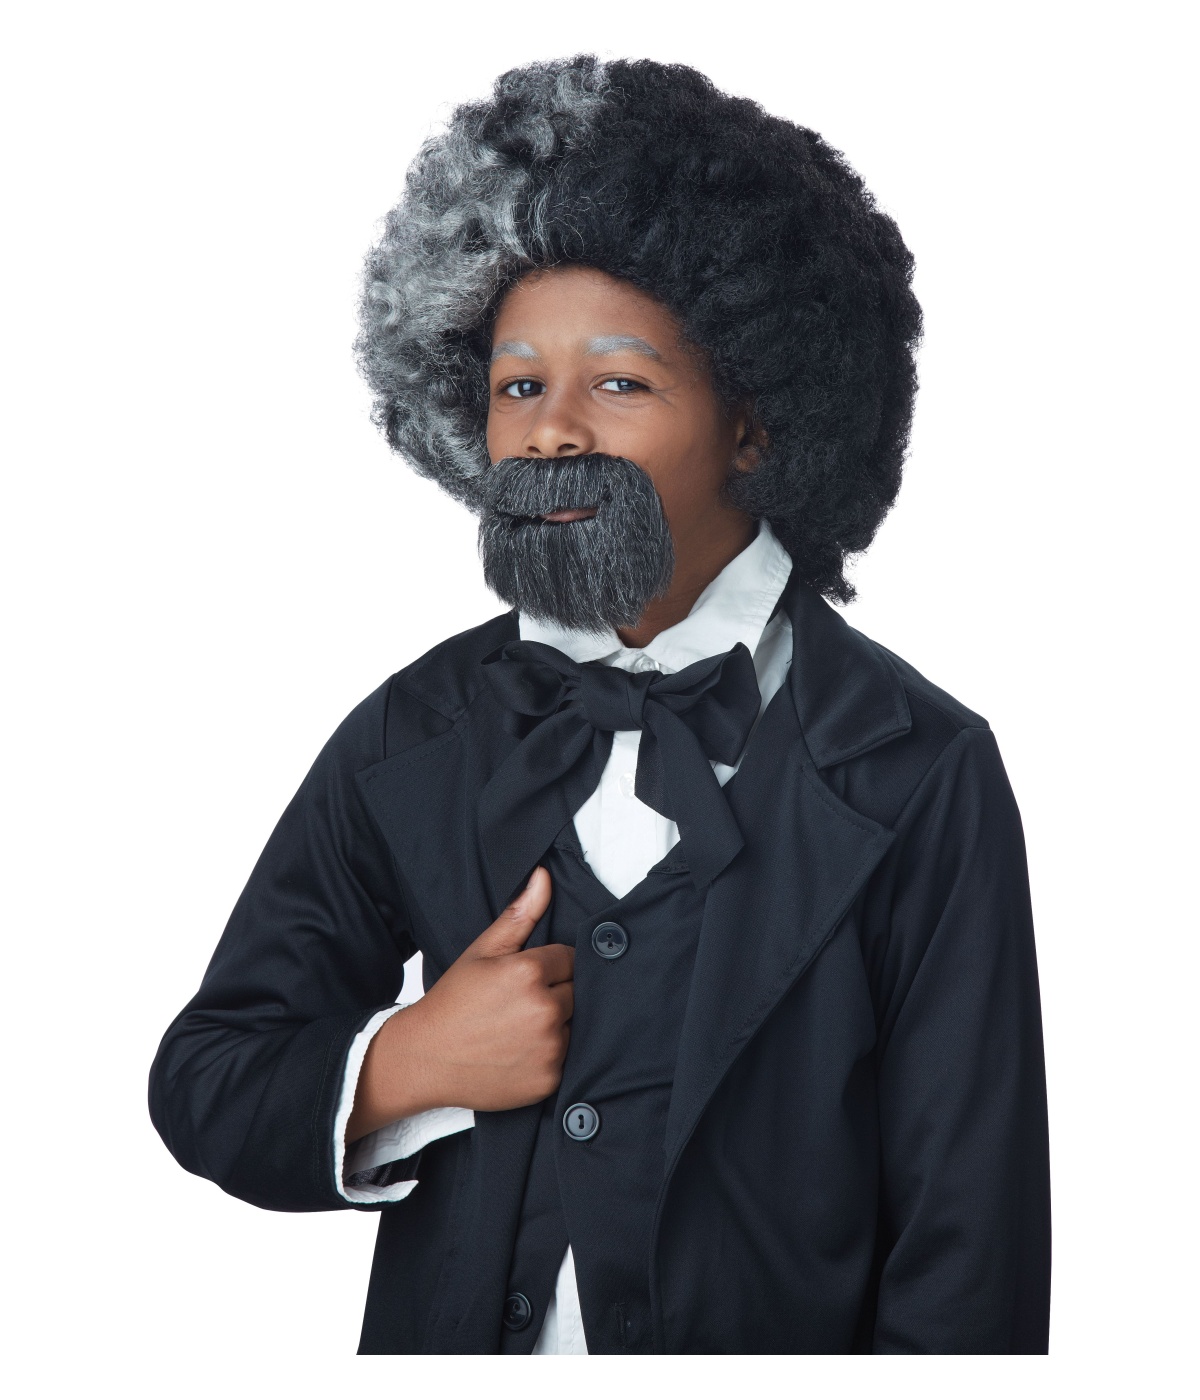  Frederick Douglass Boys Costume Wig Goatee